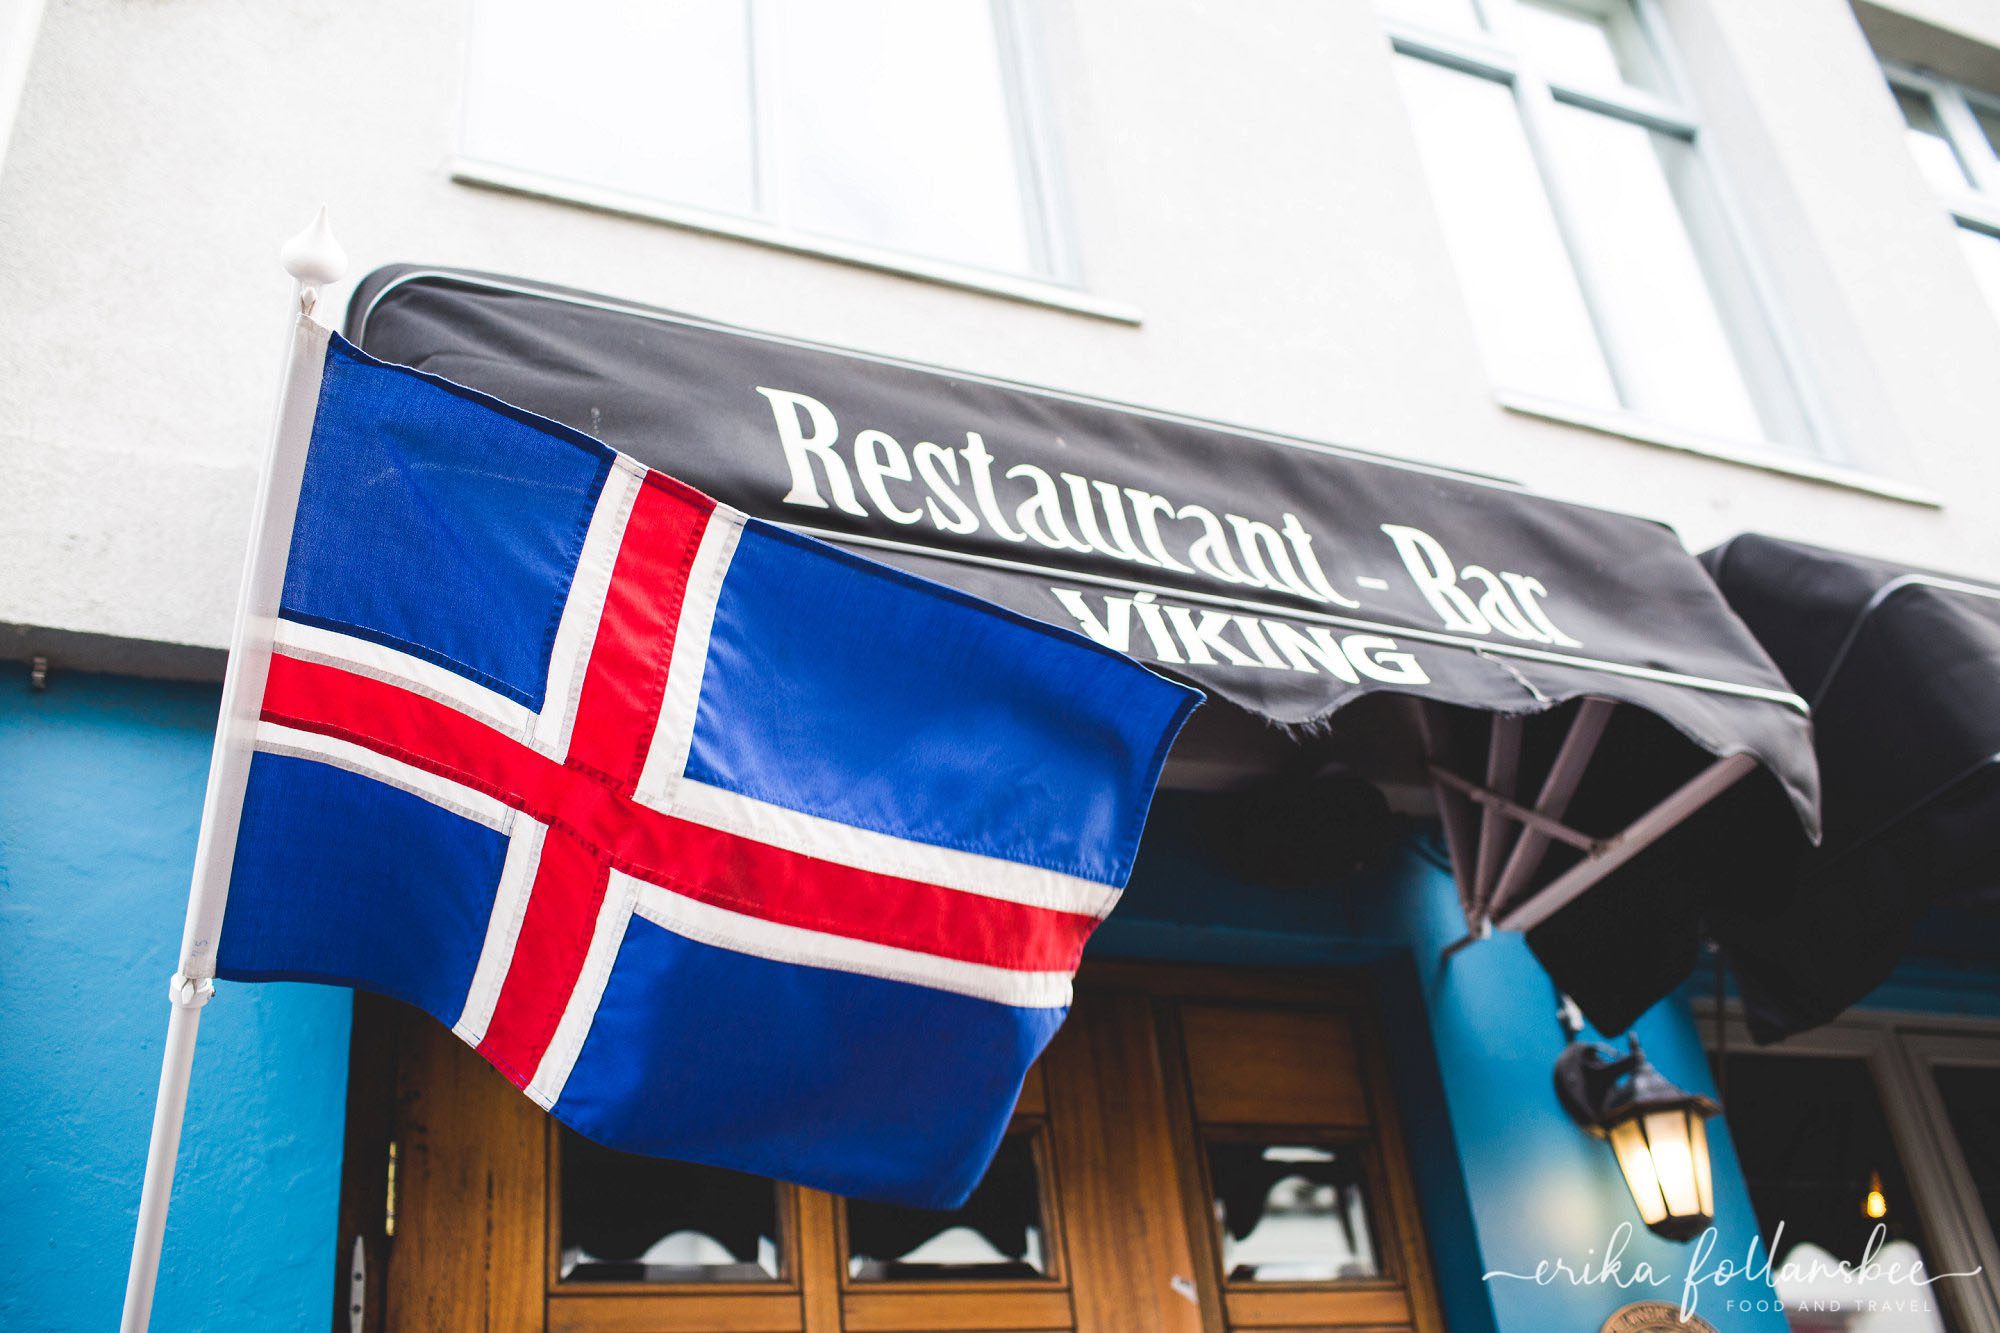 The Icelandic Bar